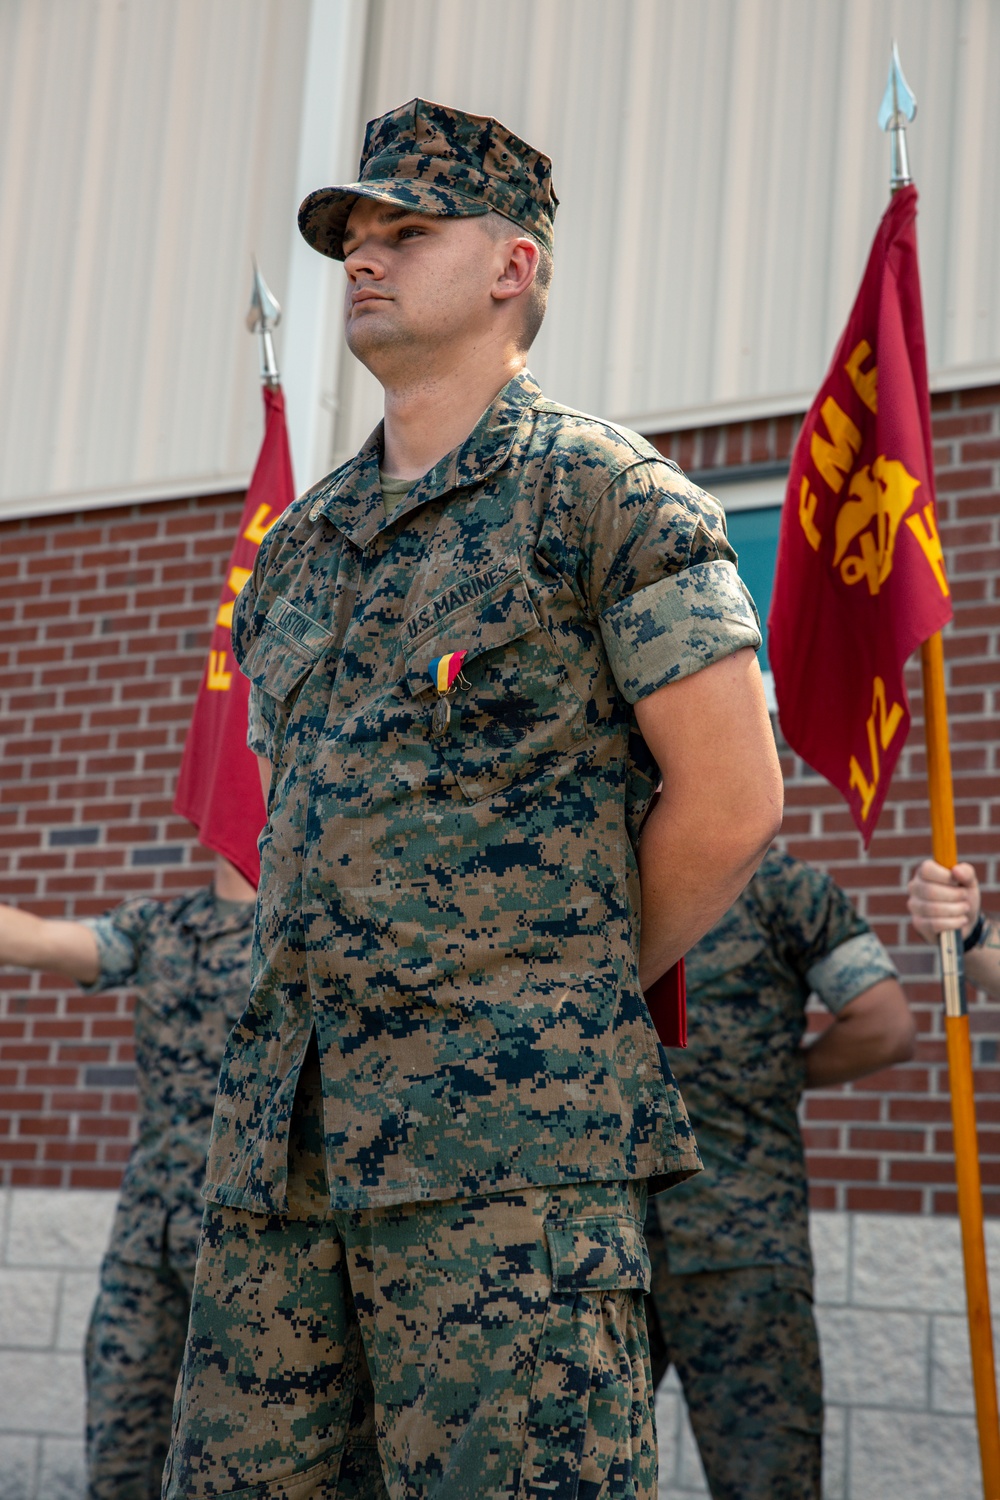 Lance Cpl. Ryan Liston awarded the Navy Marine Corps Medal